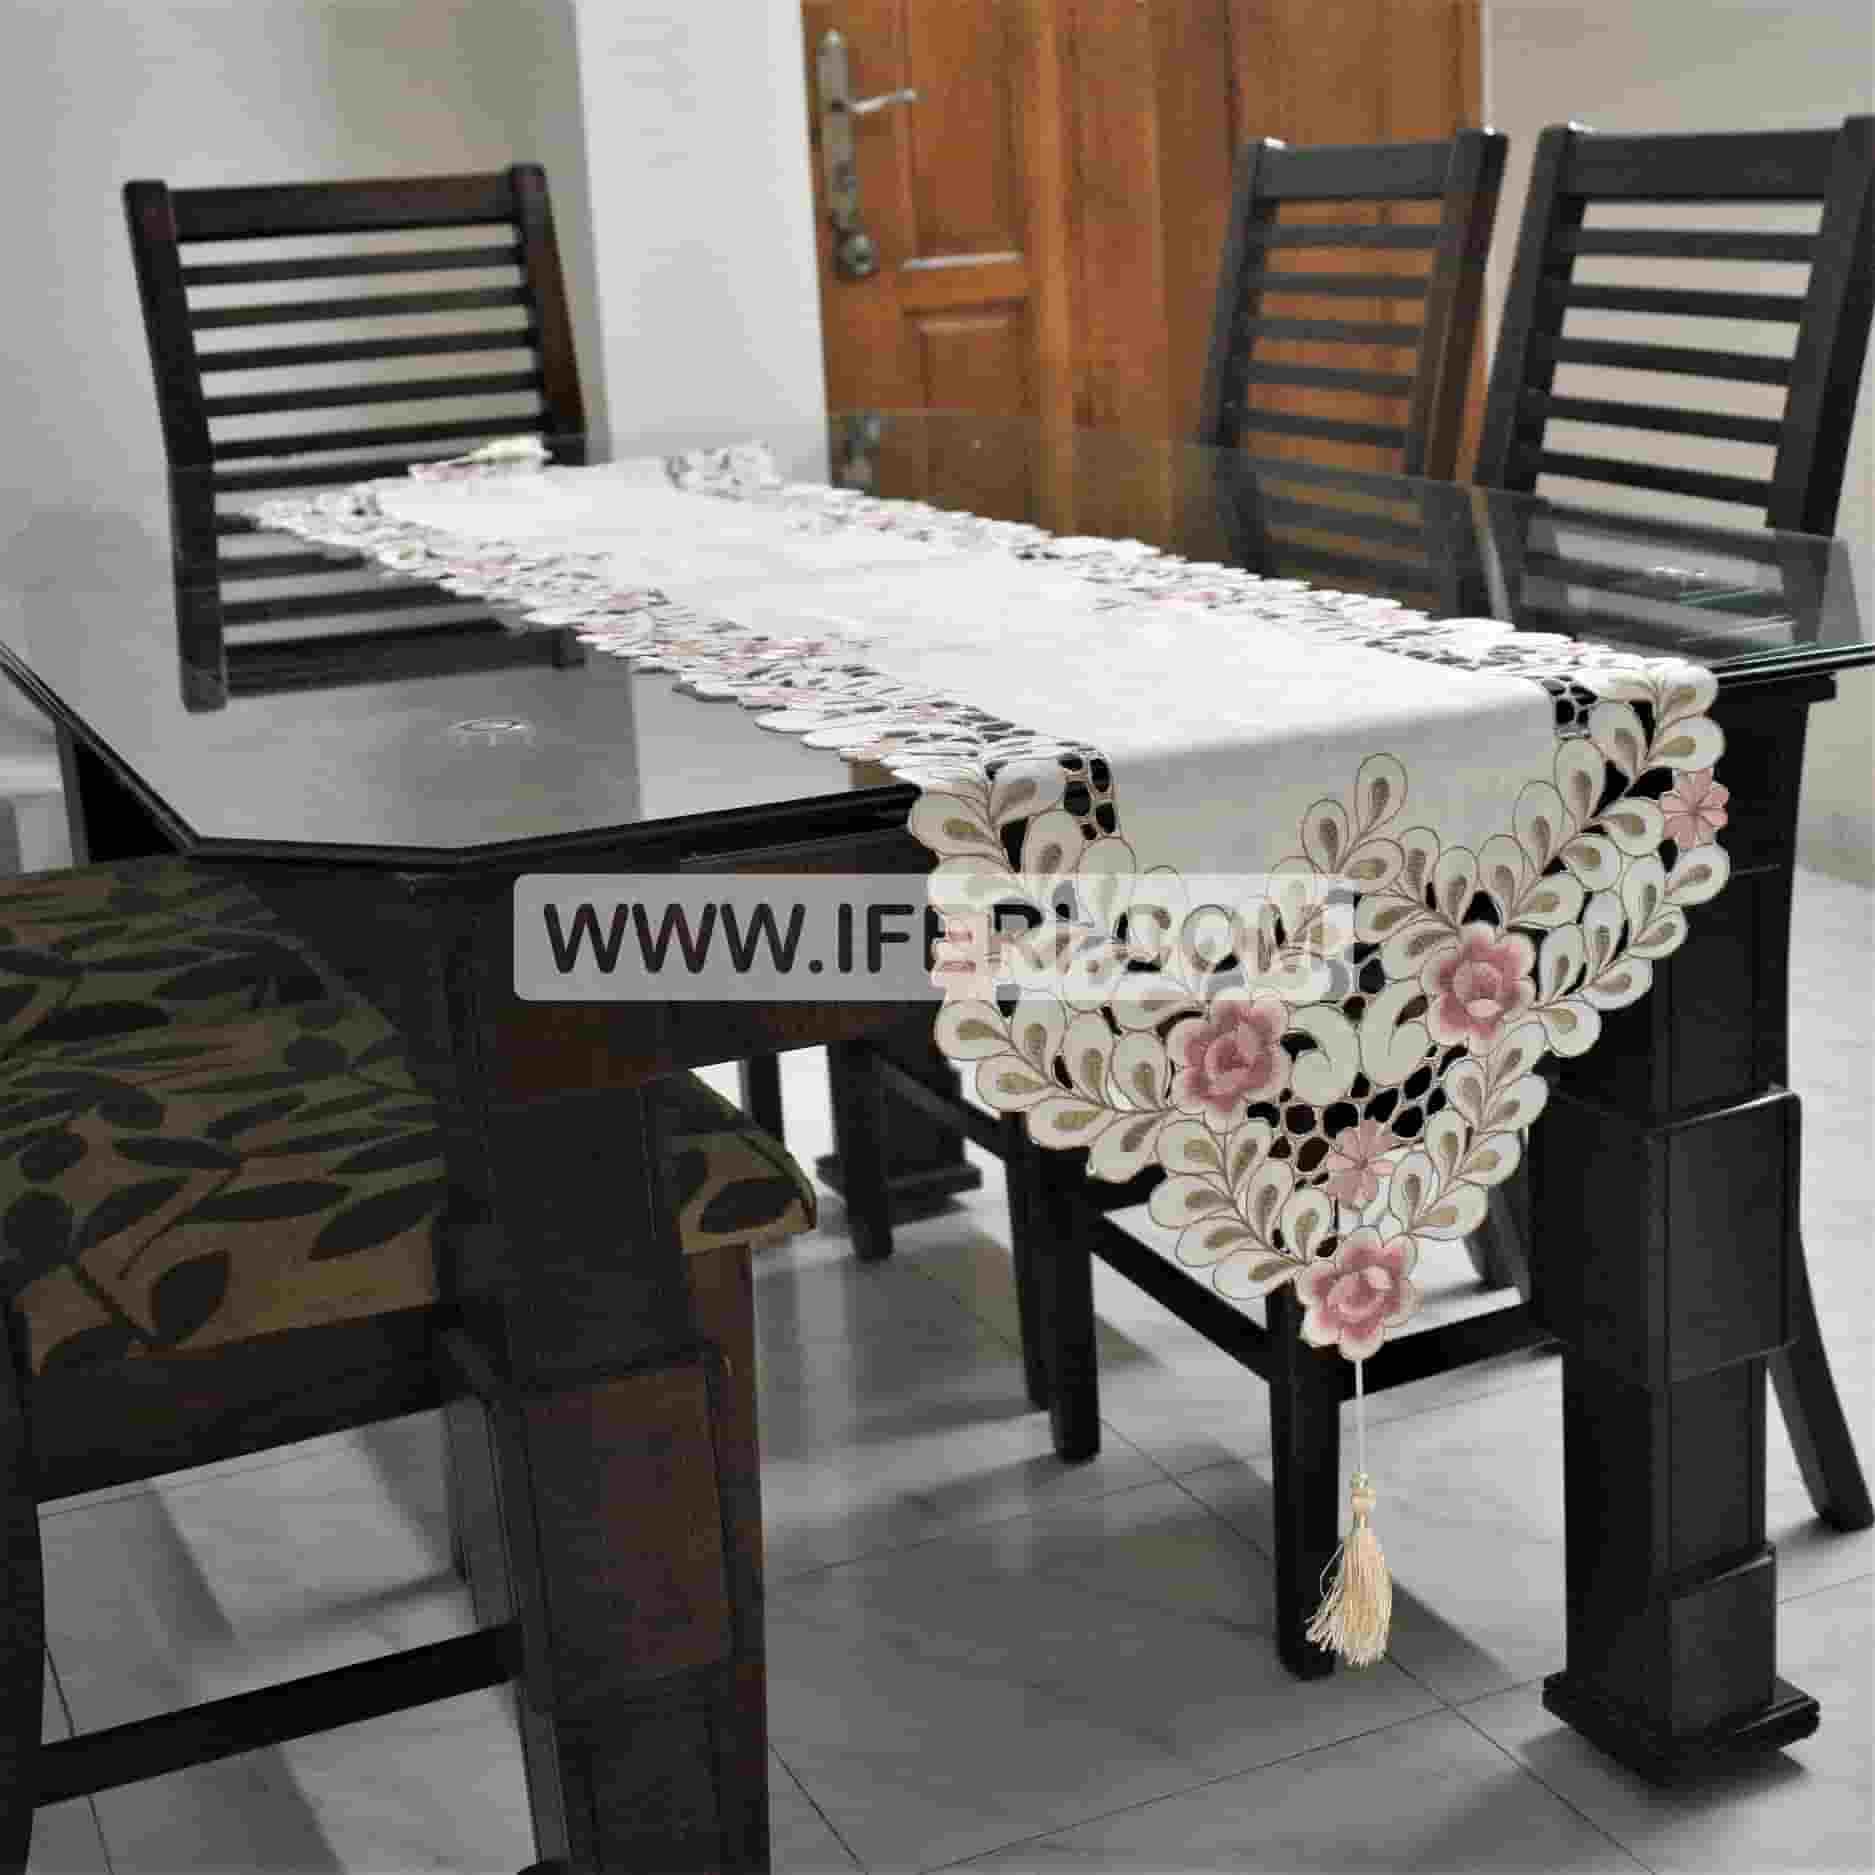 Exclusive Table Runner RJ5285 - Price in BD at iferi.com